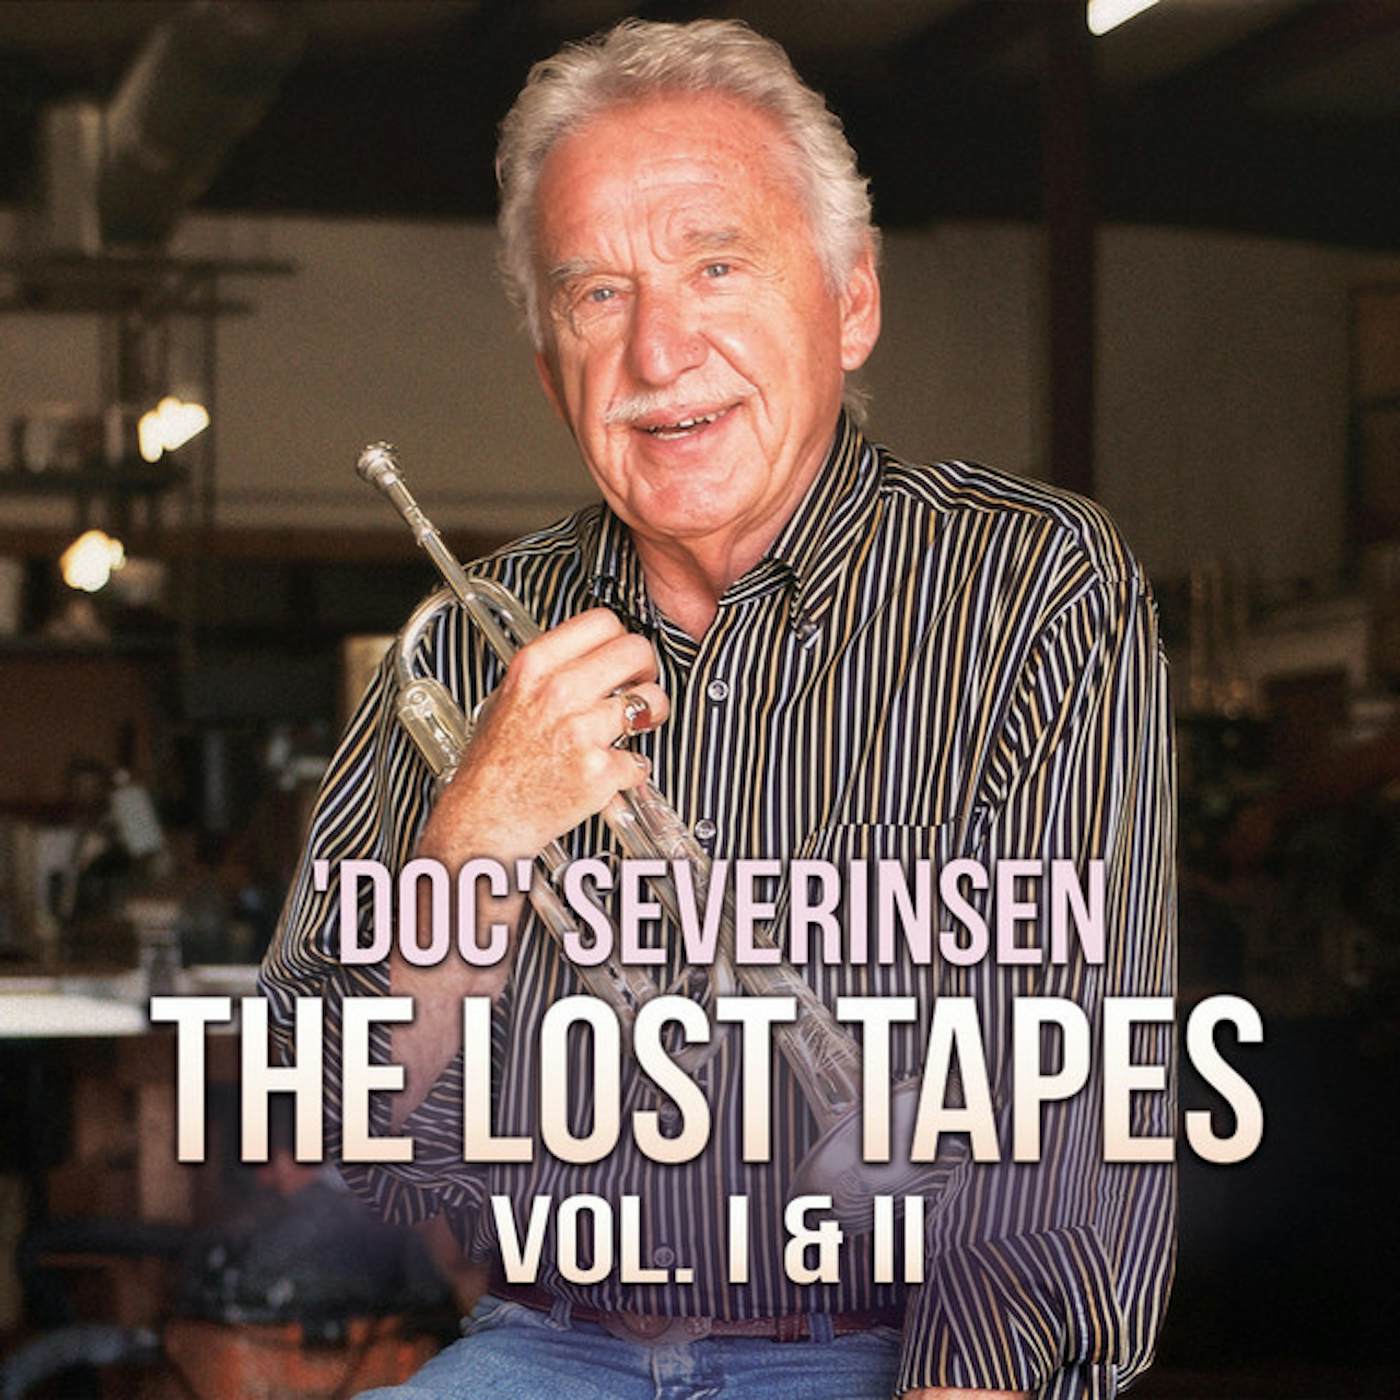 Doc Severinsen LOST TAPES I & II (LIVE) CD